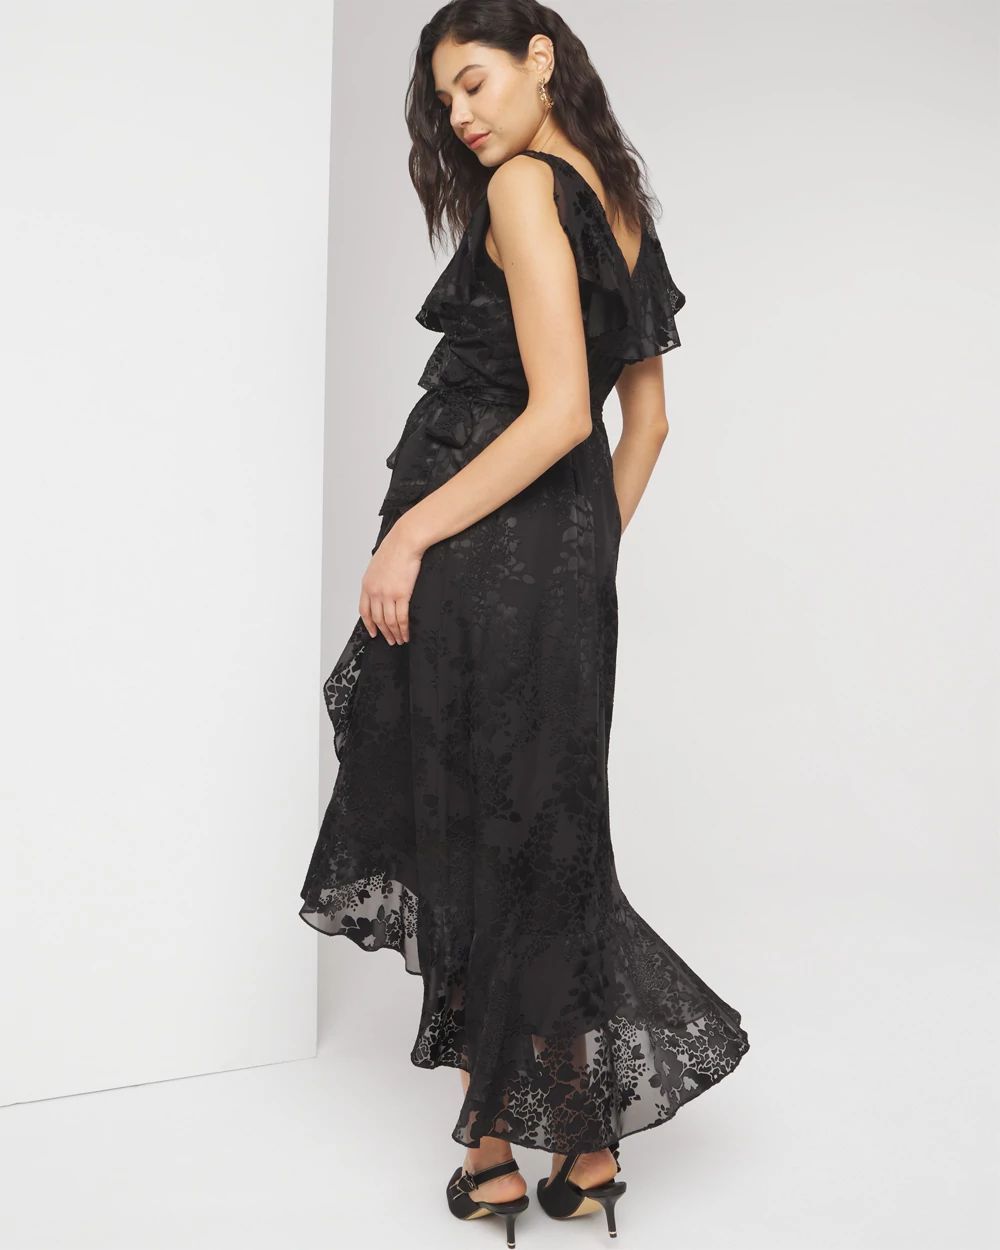 Short Sleeve Flutter Burnout Wrap Midi Dress click to view larger image.